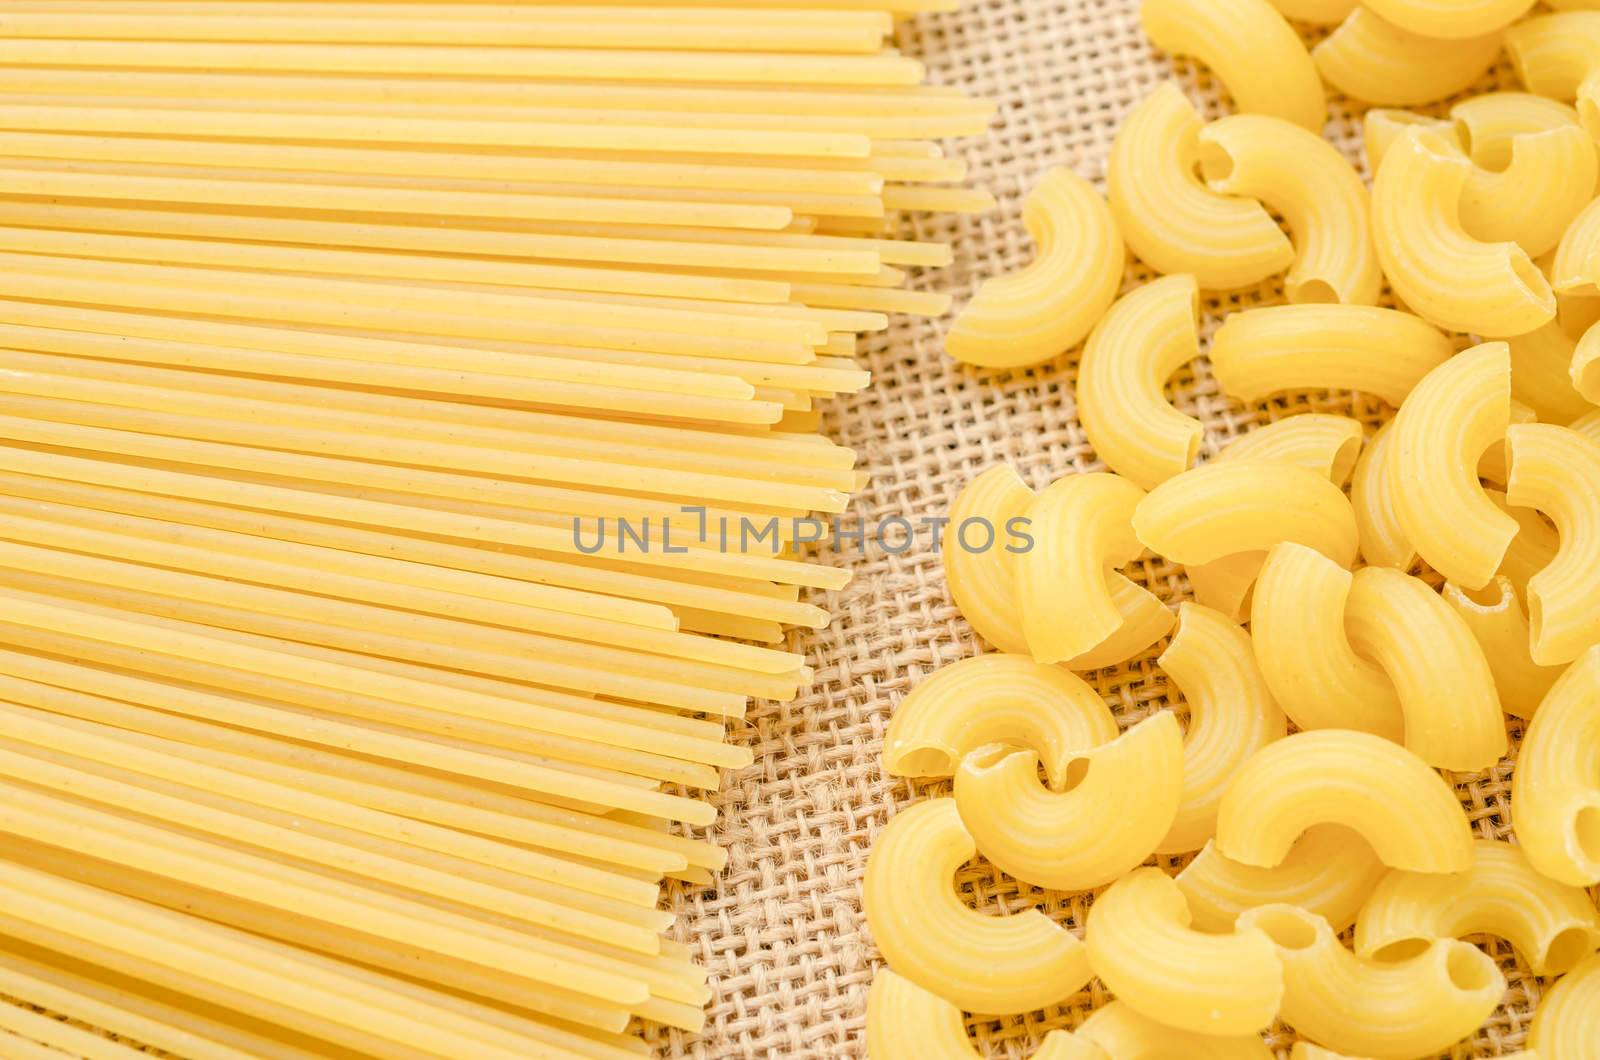 Raw Spaghetti and elbow macaroni. by Gamjai